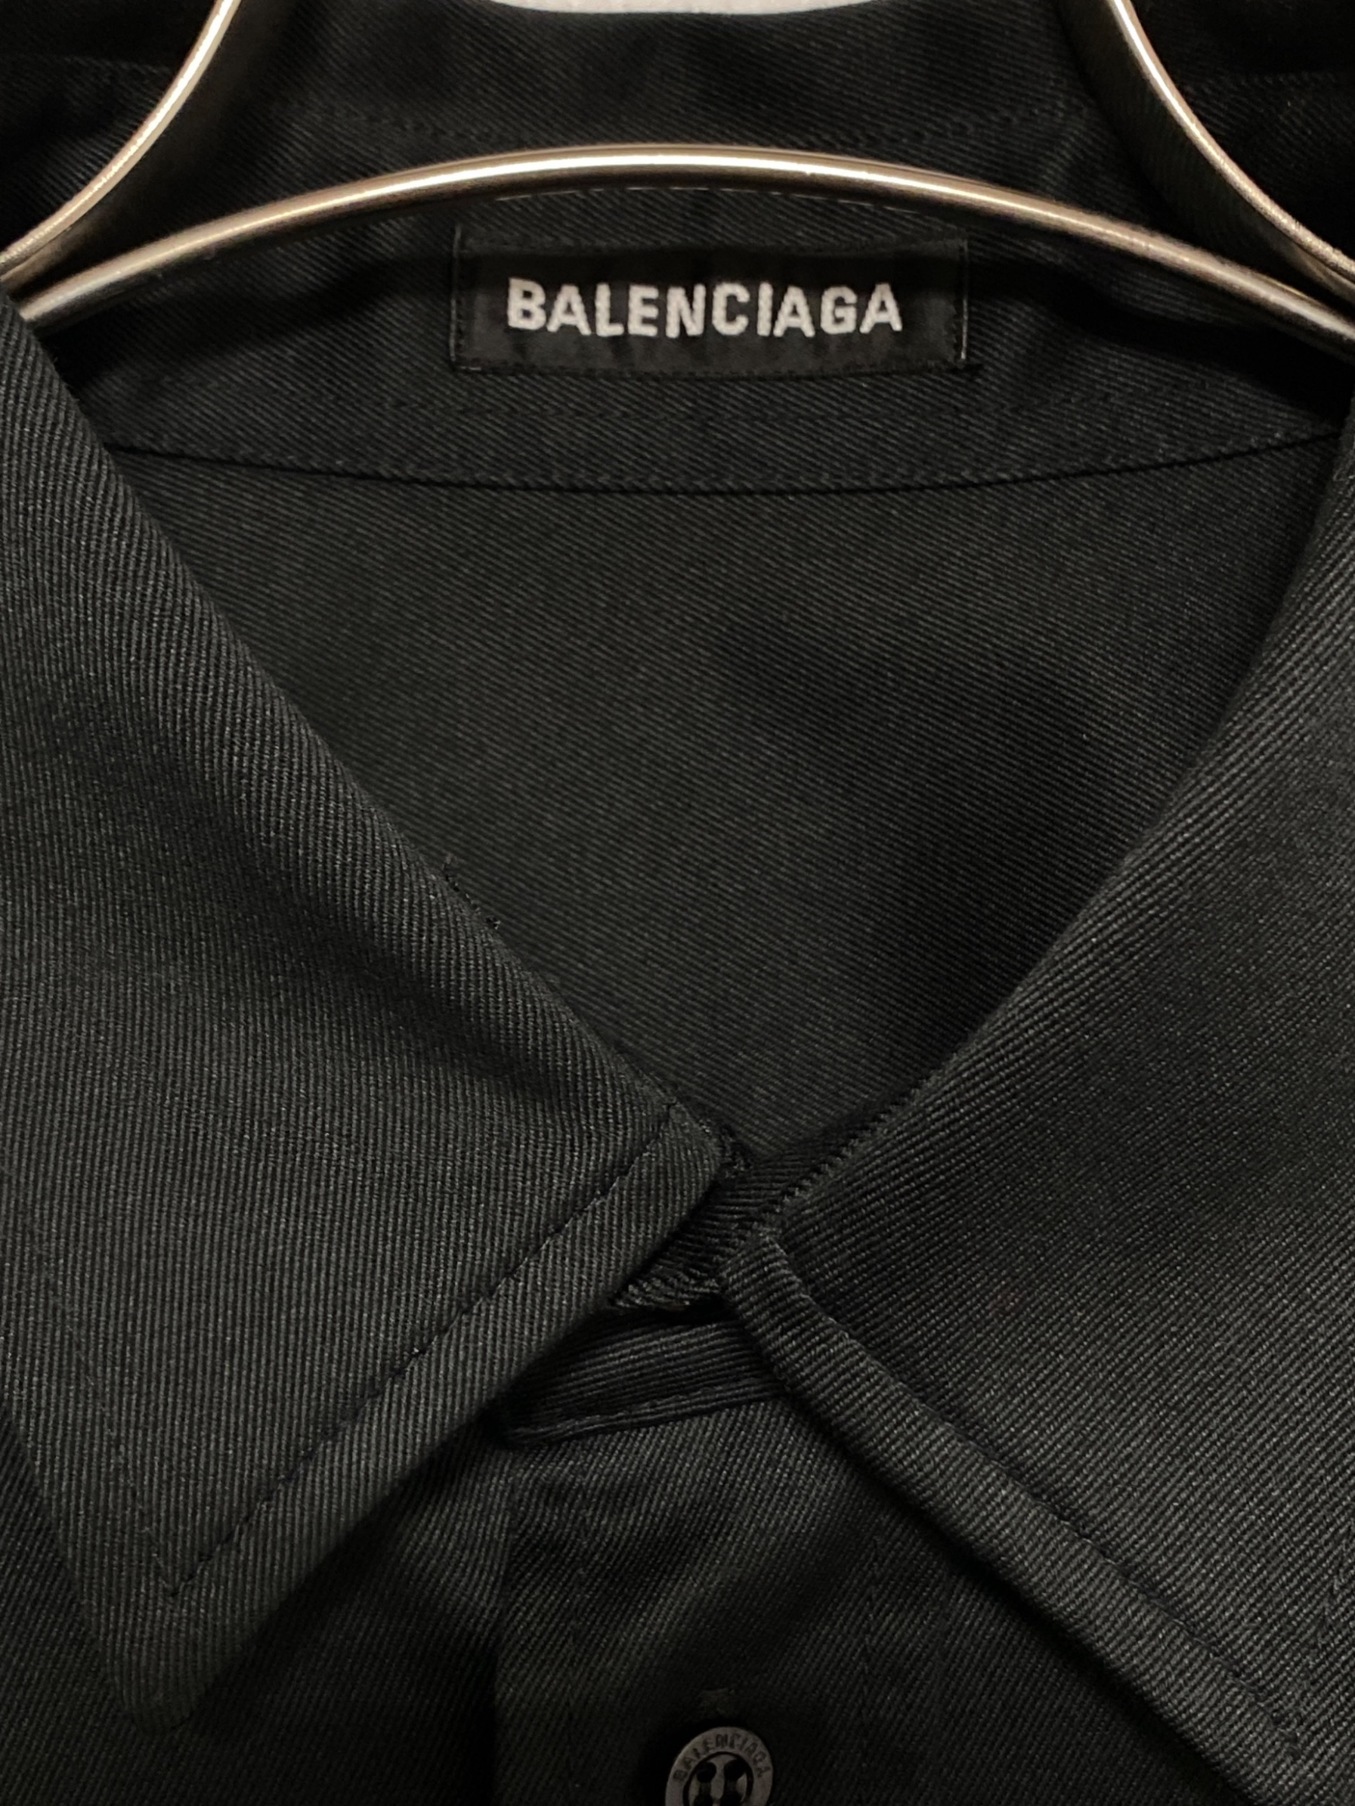 BALENCIAGAバレンシアガ ヴィンテージ80's 刺繍 開襟 白半袖シャツ